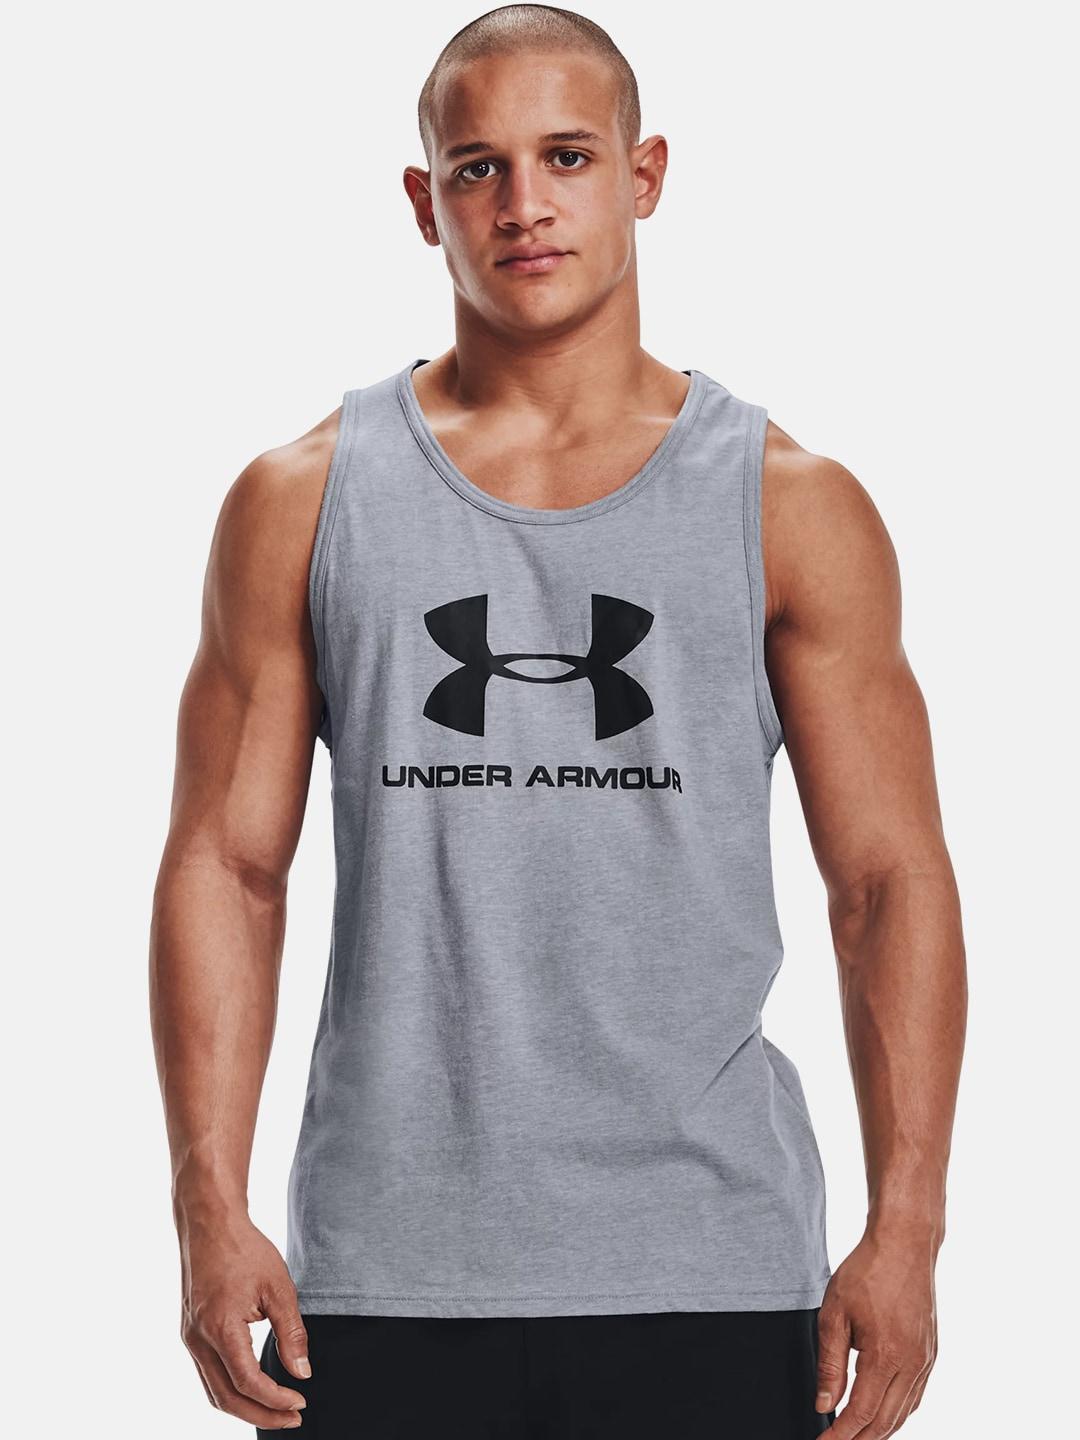 UNDER ARMOUR Men Grey & Black Brand Logo Printed Loose T-shirt